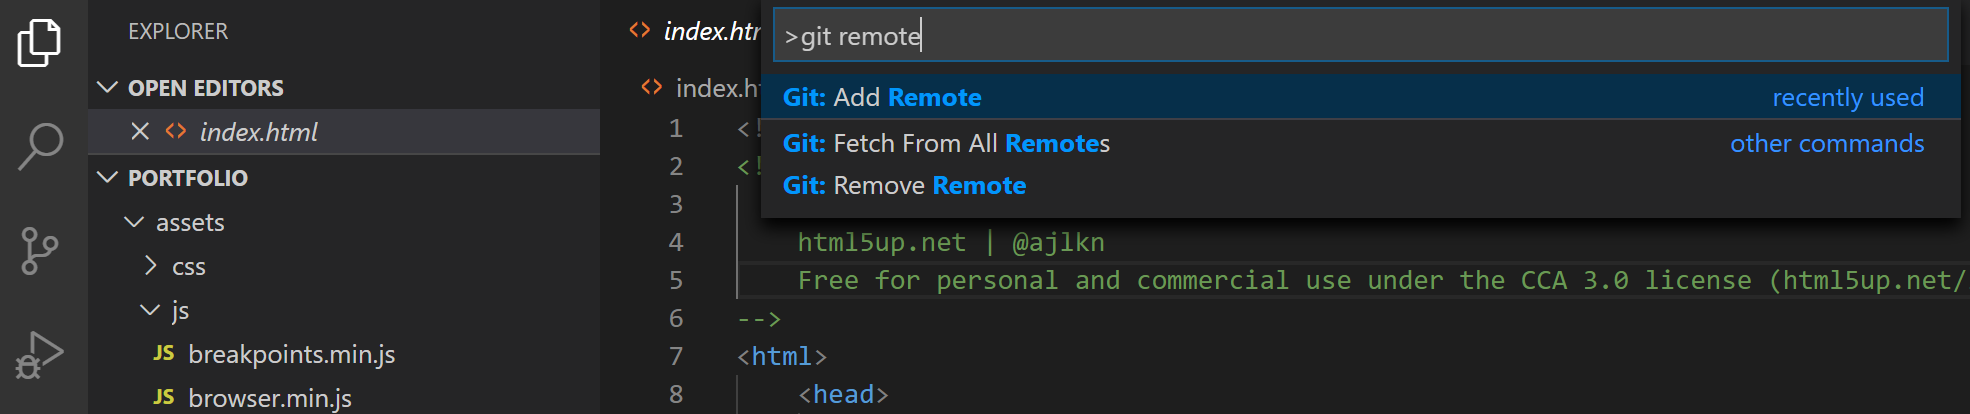 Git add remote